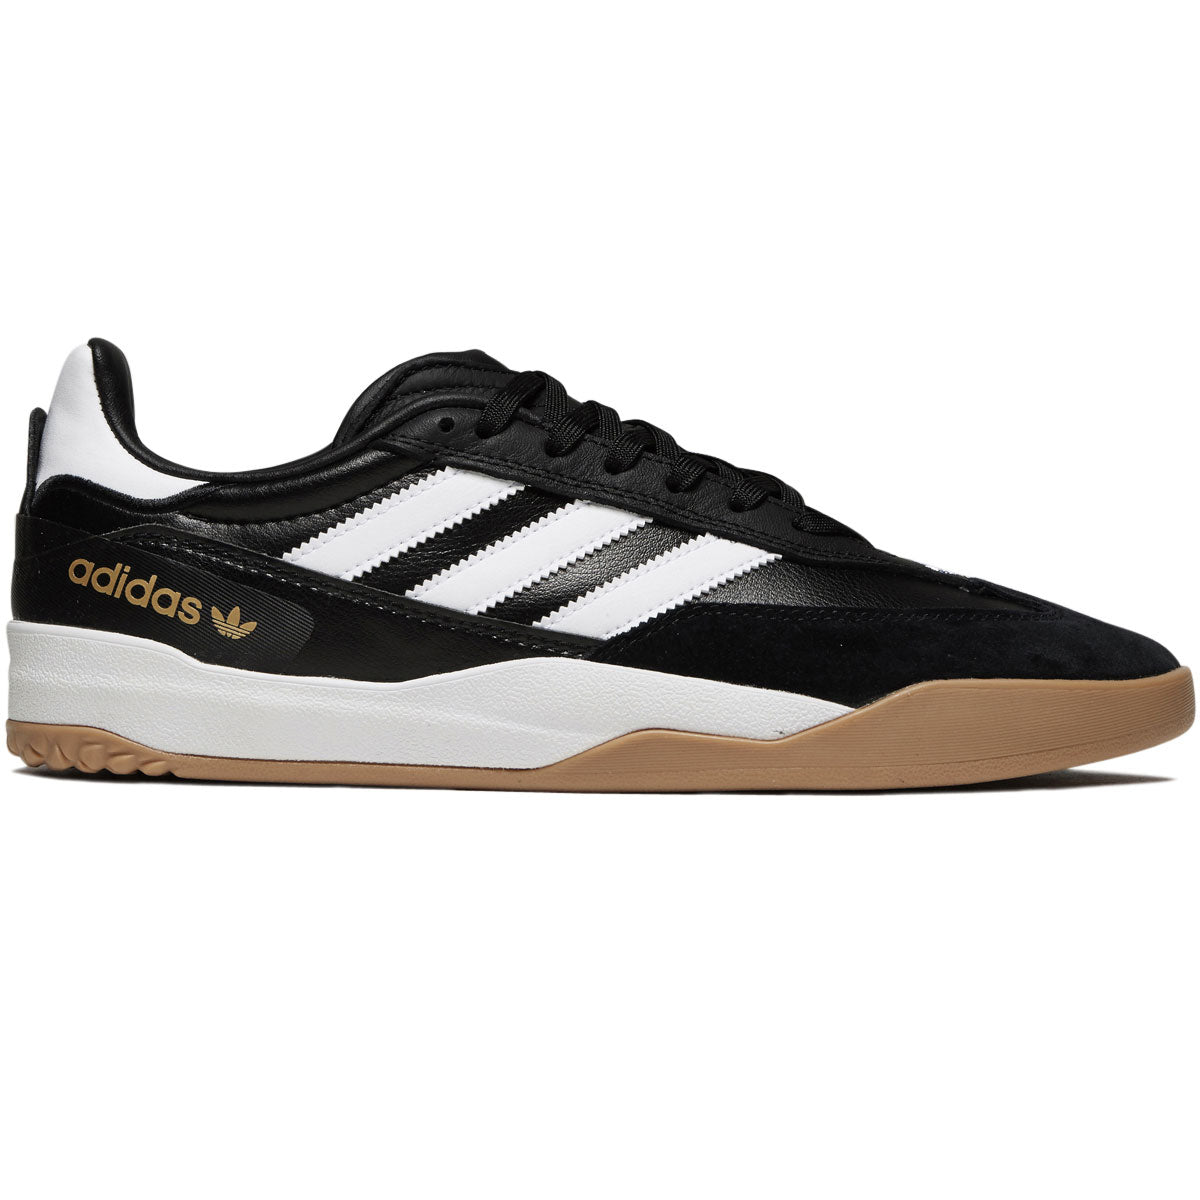 Adidas Copa Nationale Shoes - Black/White/Gold Metallic image 1